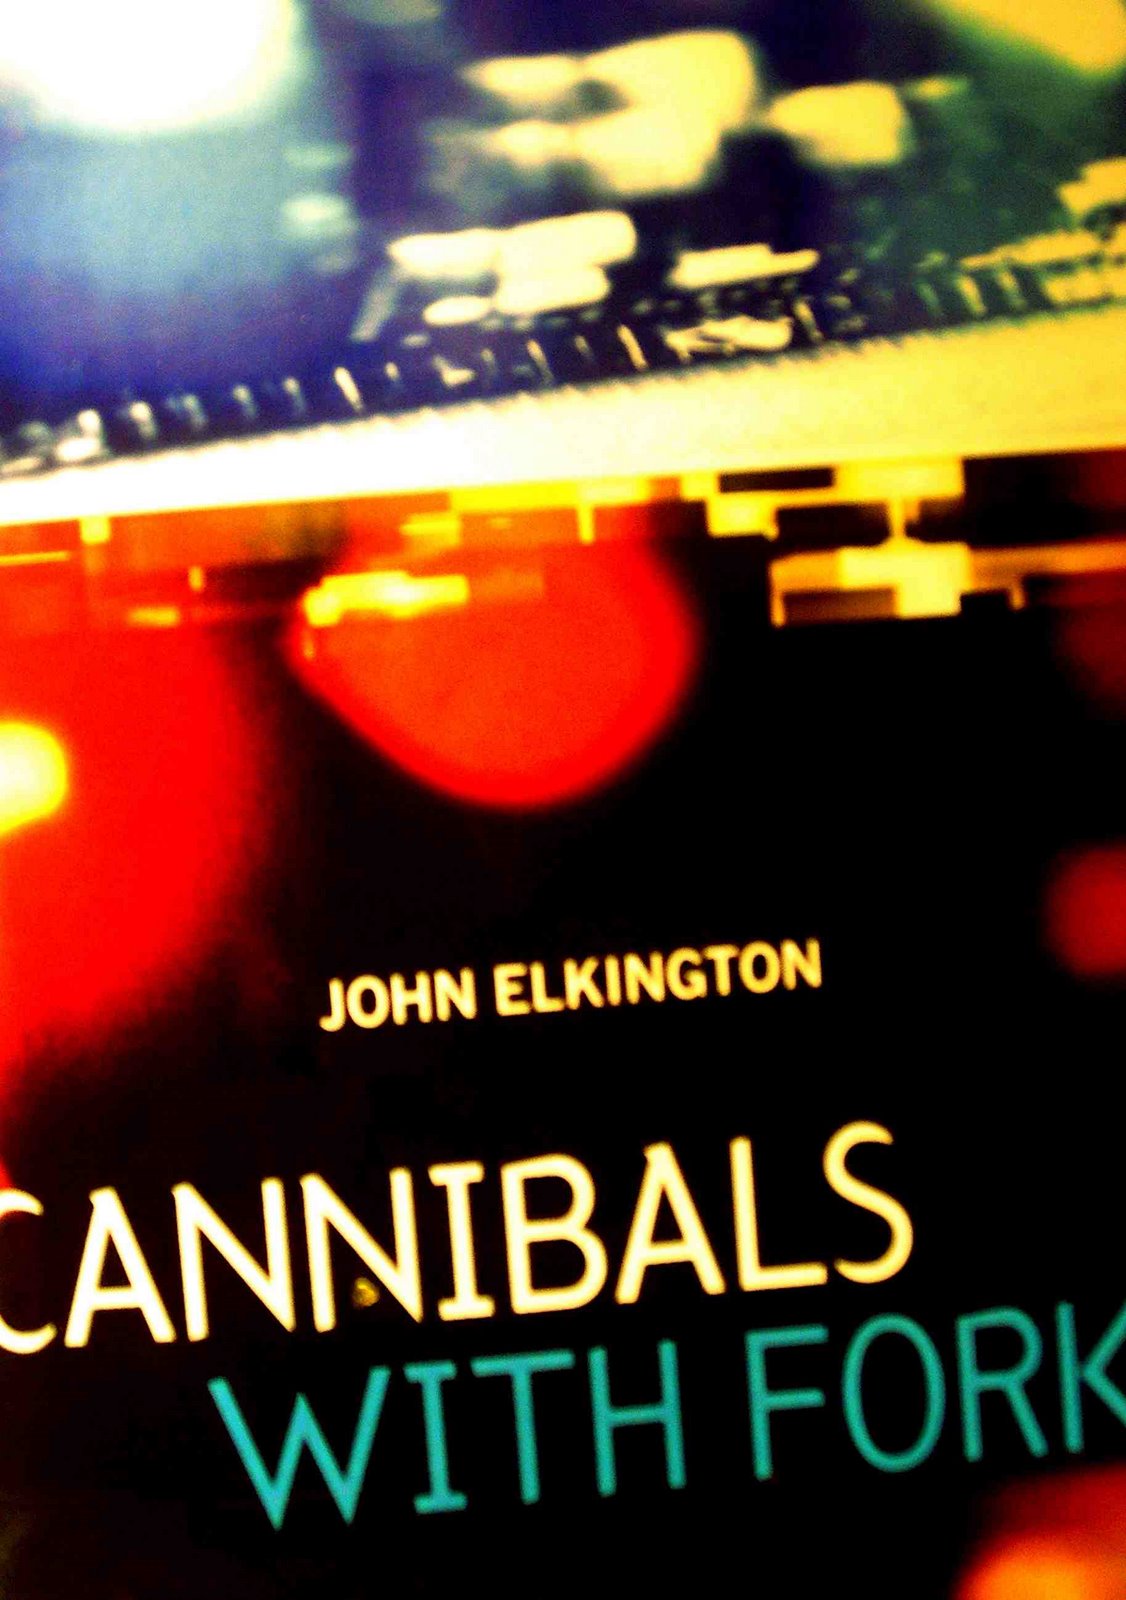 [Cannibals.jpg]